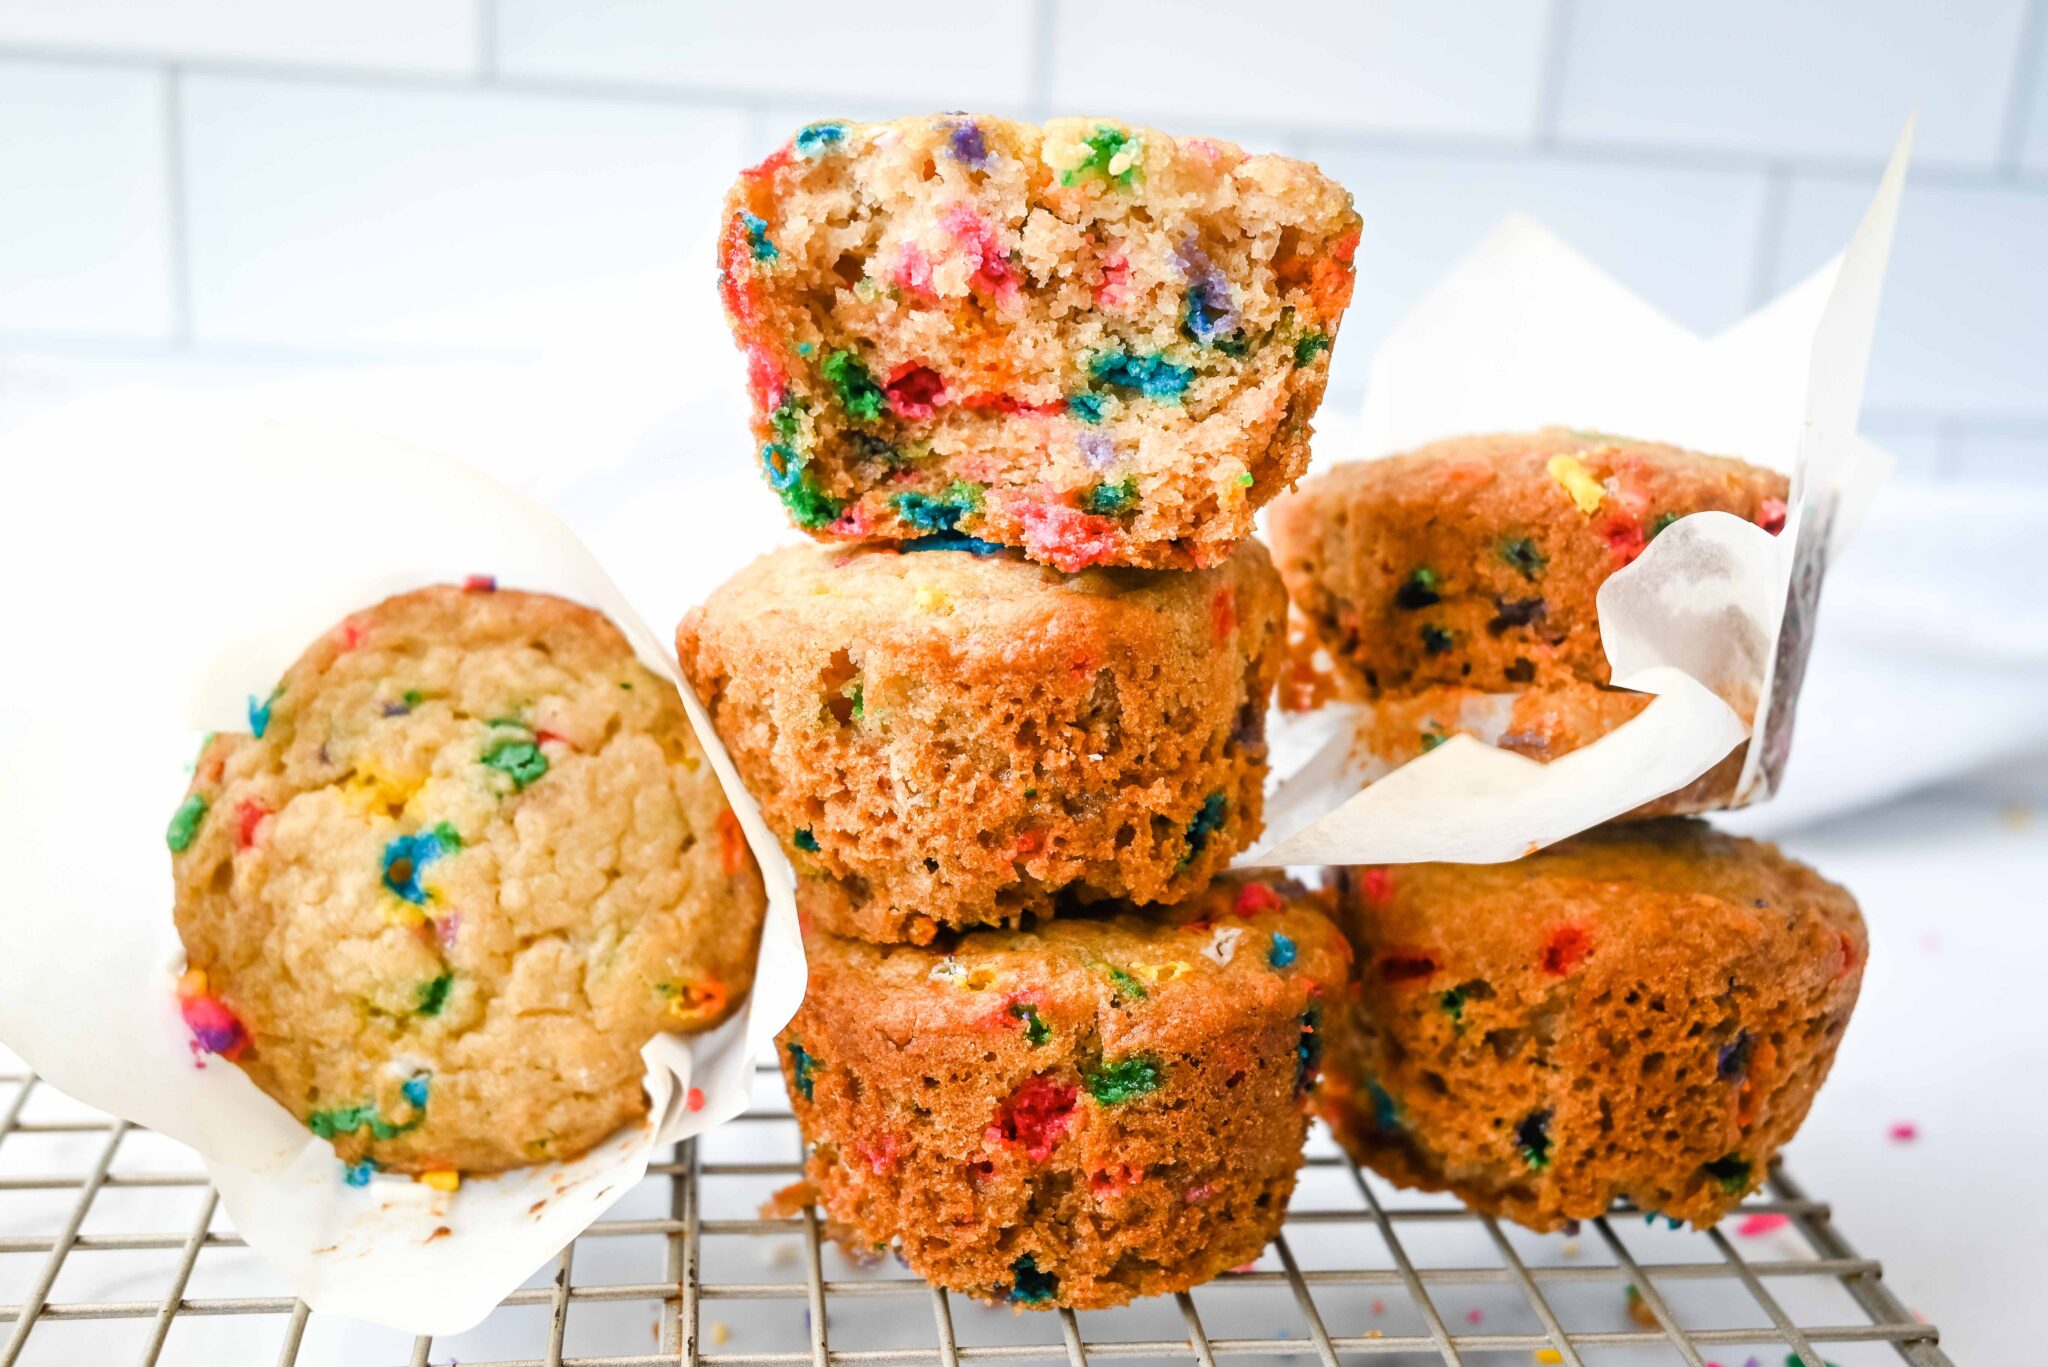 Birthday Cake Muffins showing rainbow sprinkles inside